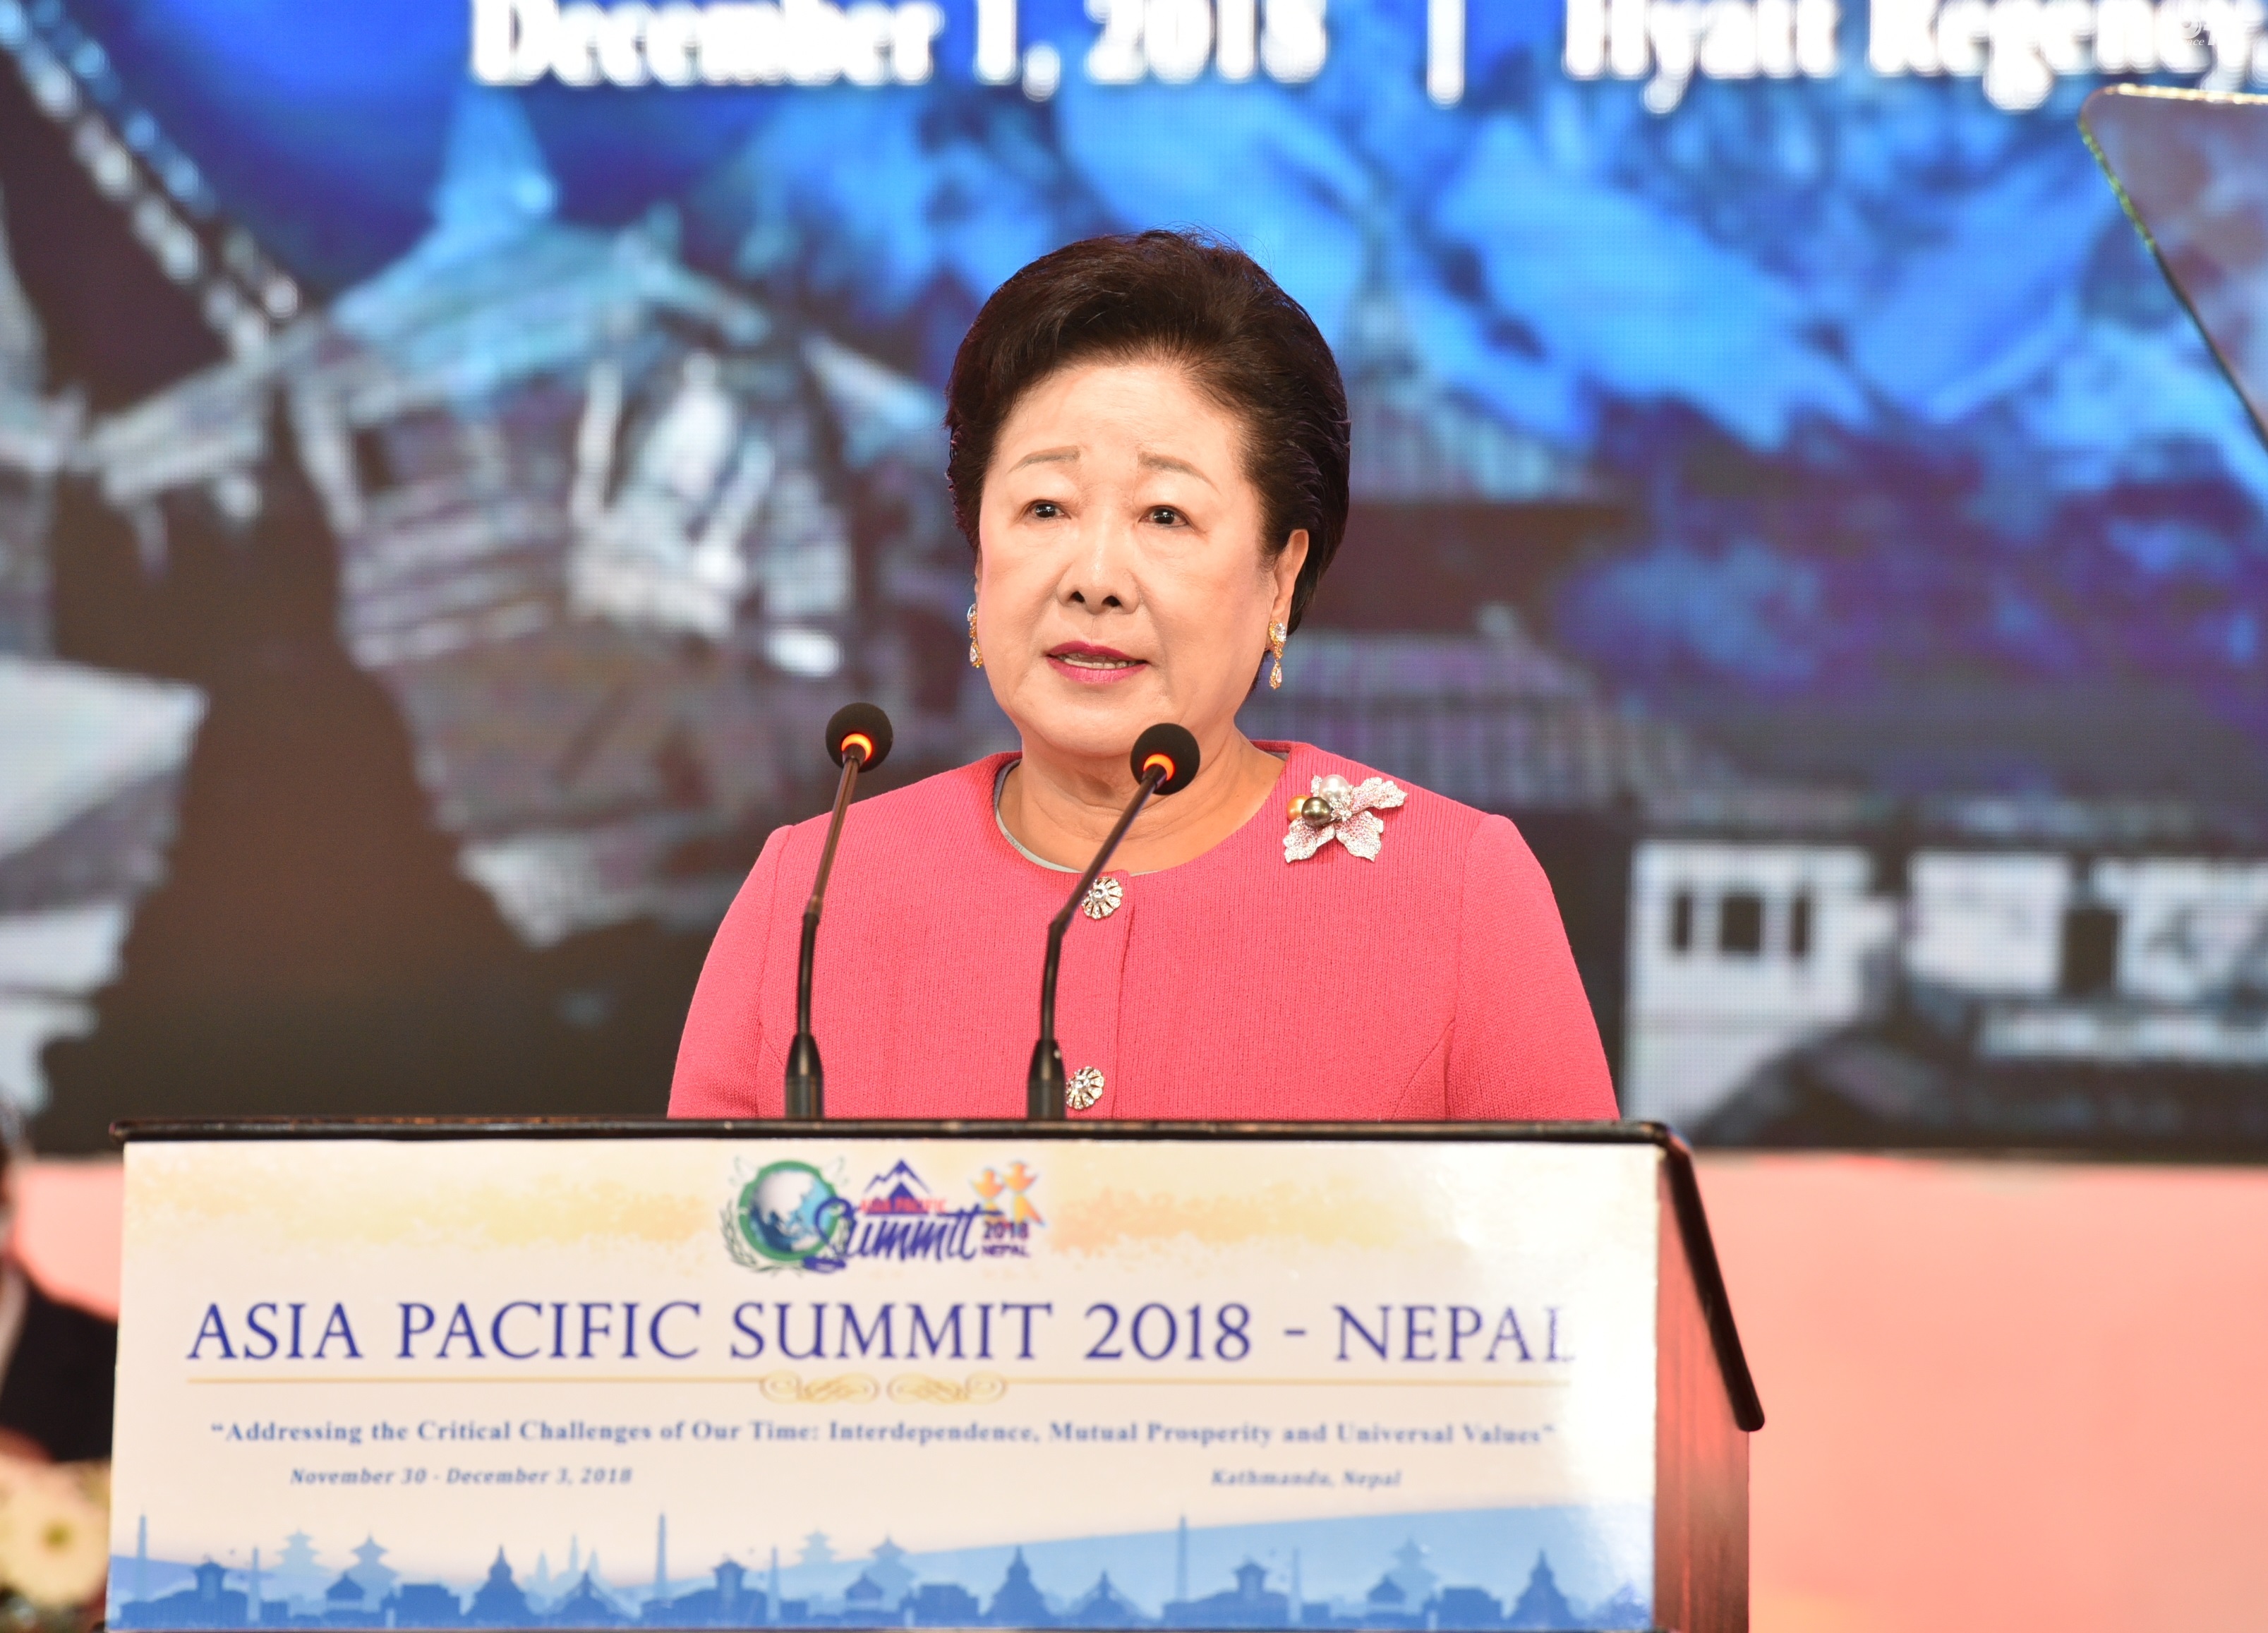 Asia Pacific Summit 2018 (December 1, 2018) Hyatt Regency in Kathmandu, Nepal